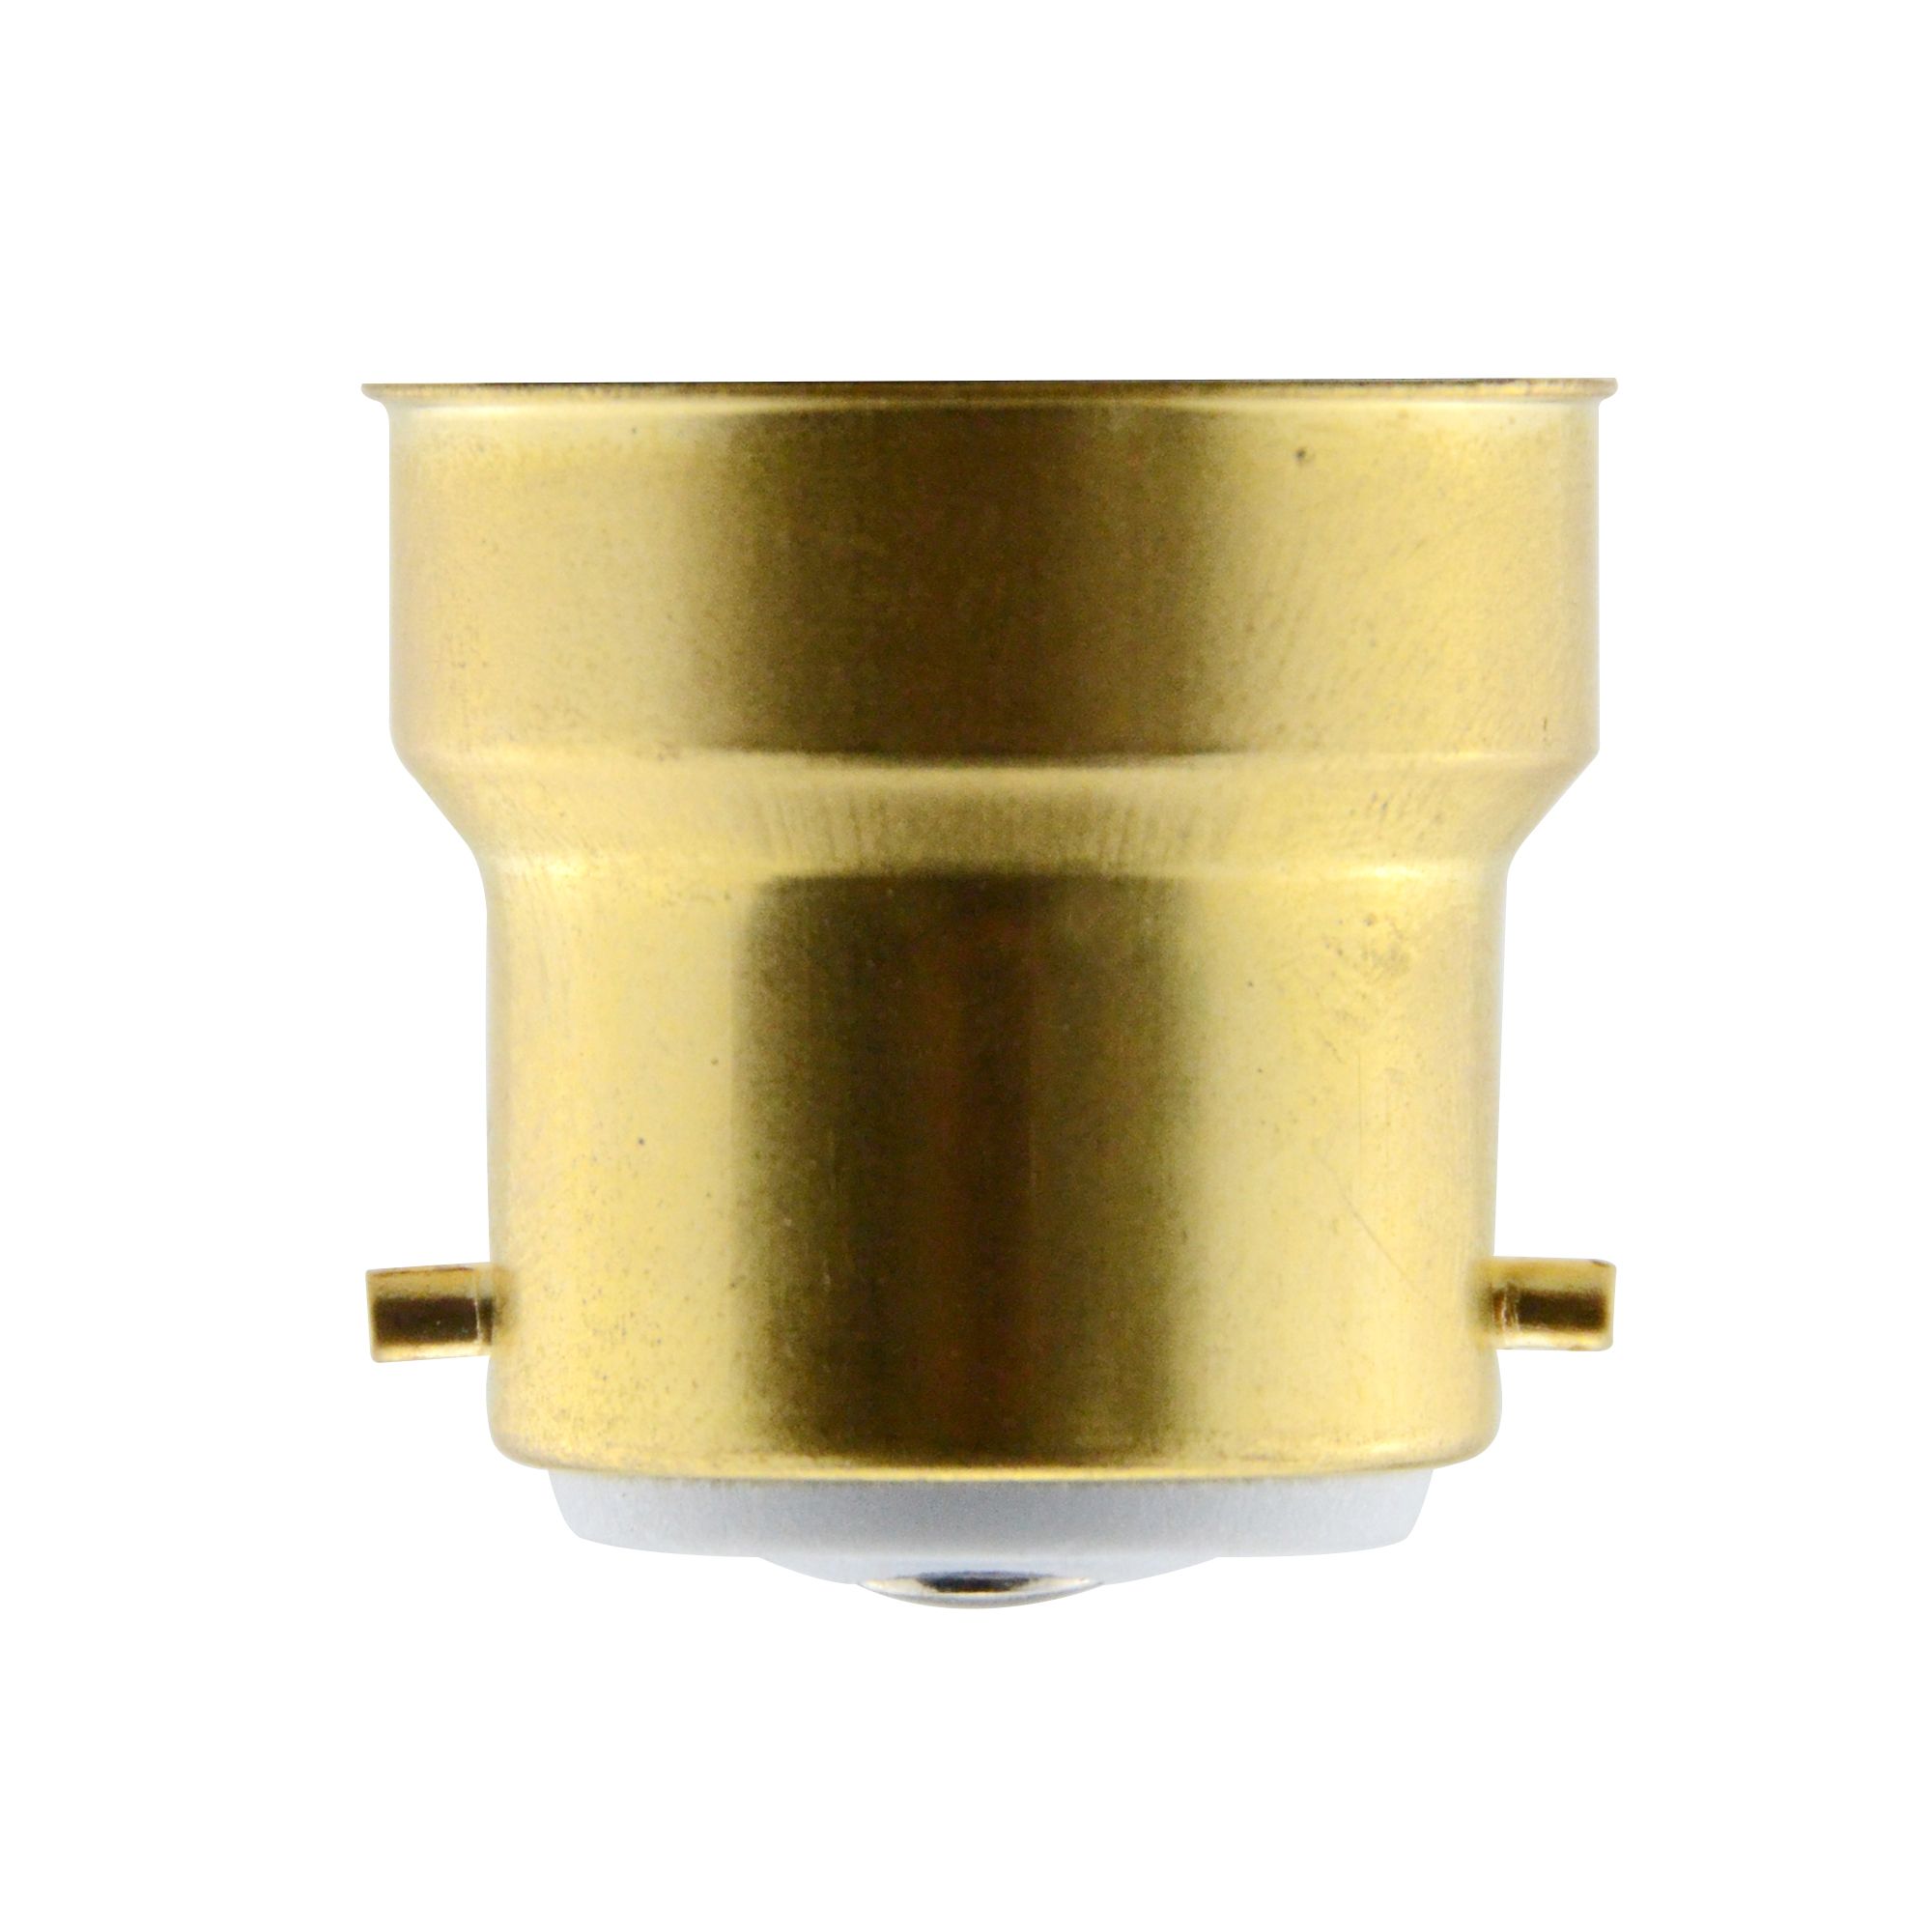 Diall G125 B22 5.5W 470lm Amber Globe Warm white LED Filament Light bulb